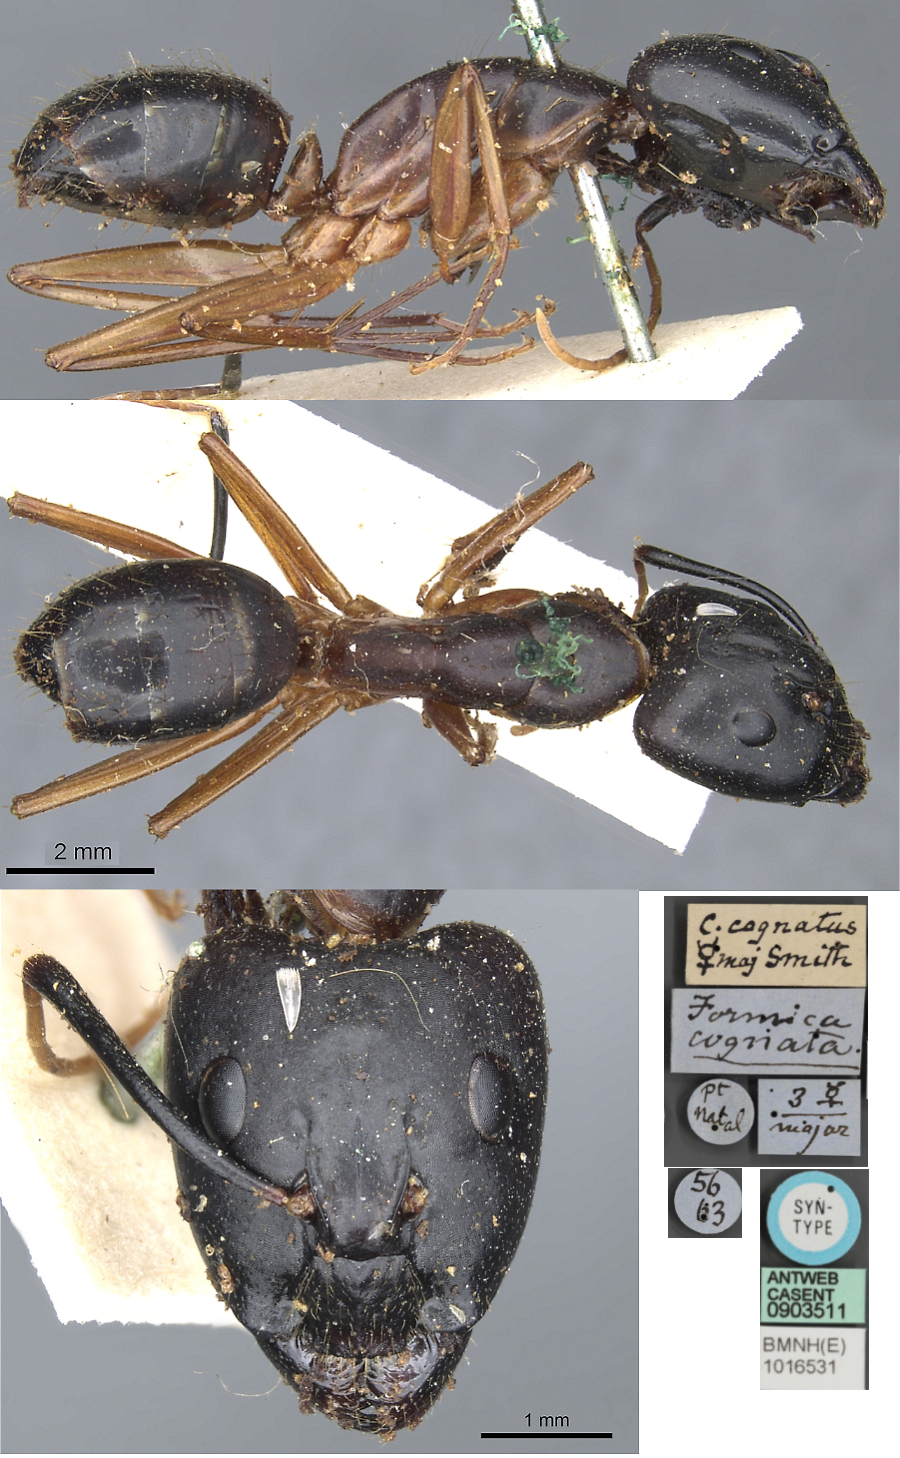 Camponotus cognatus major